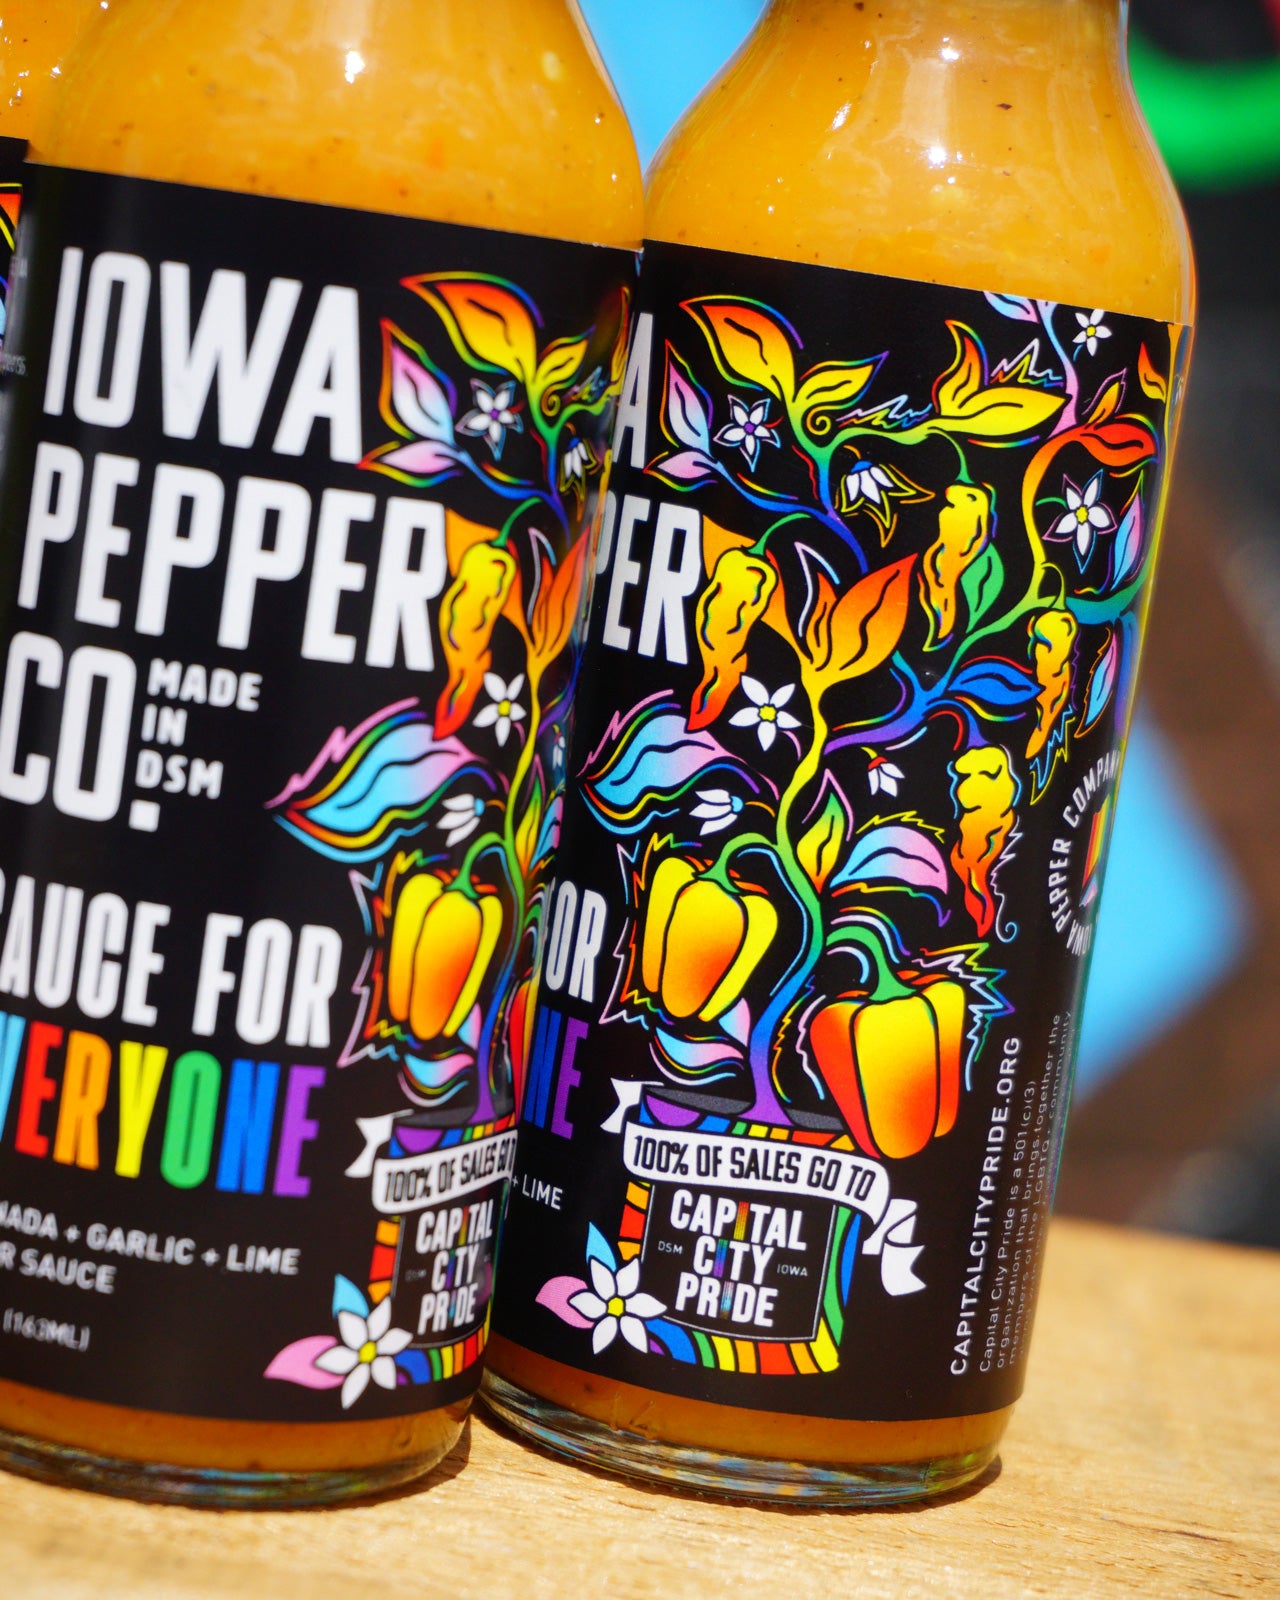 Sauce For Everyone – Capital City Pride Fundraiser Sauce